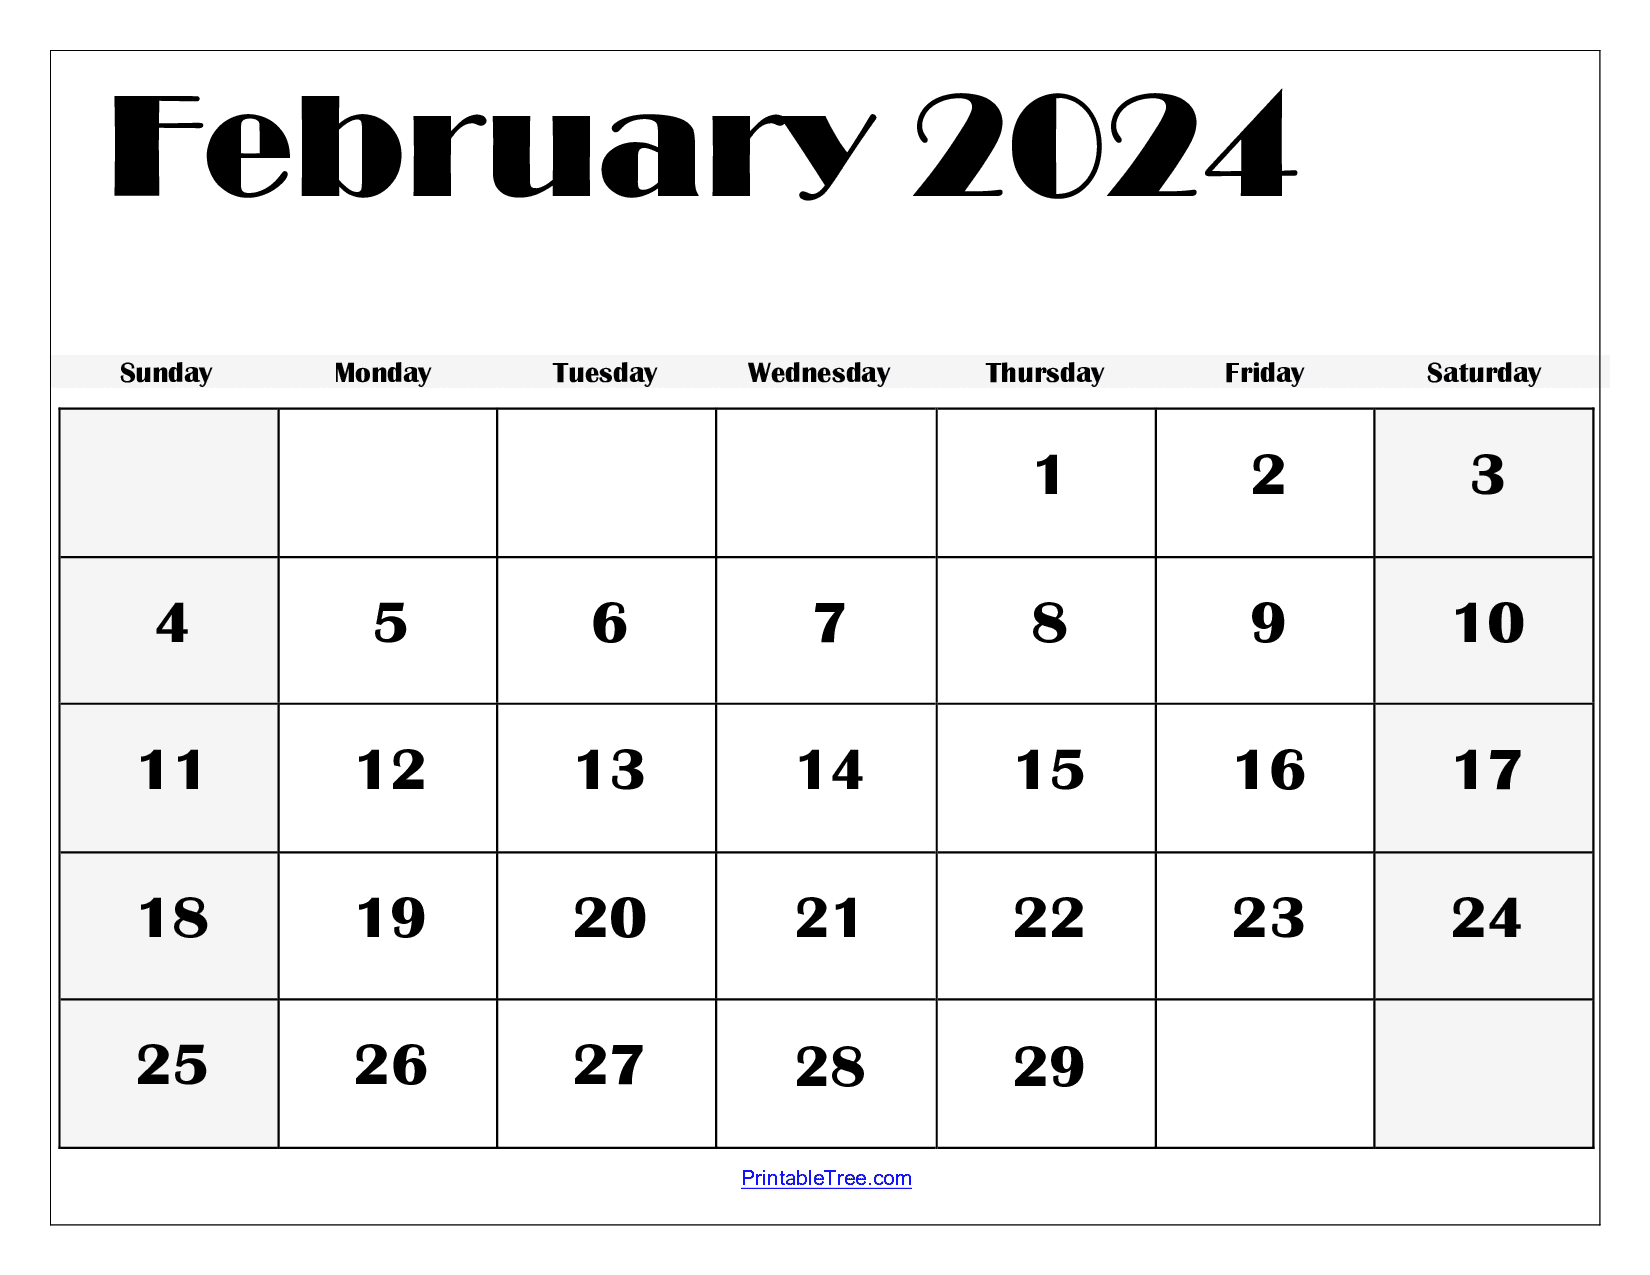 February 2024 Calendar Printable Pdf Template With Holidays for Feb 2024 Calendar Free Printable